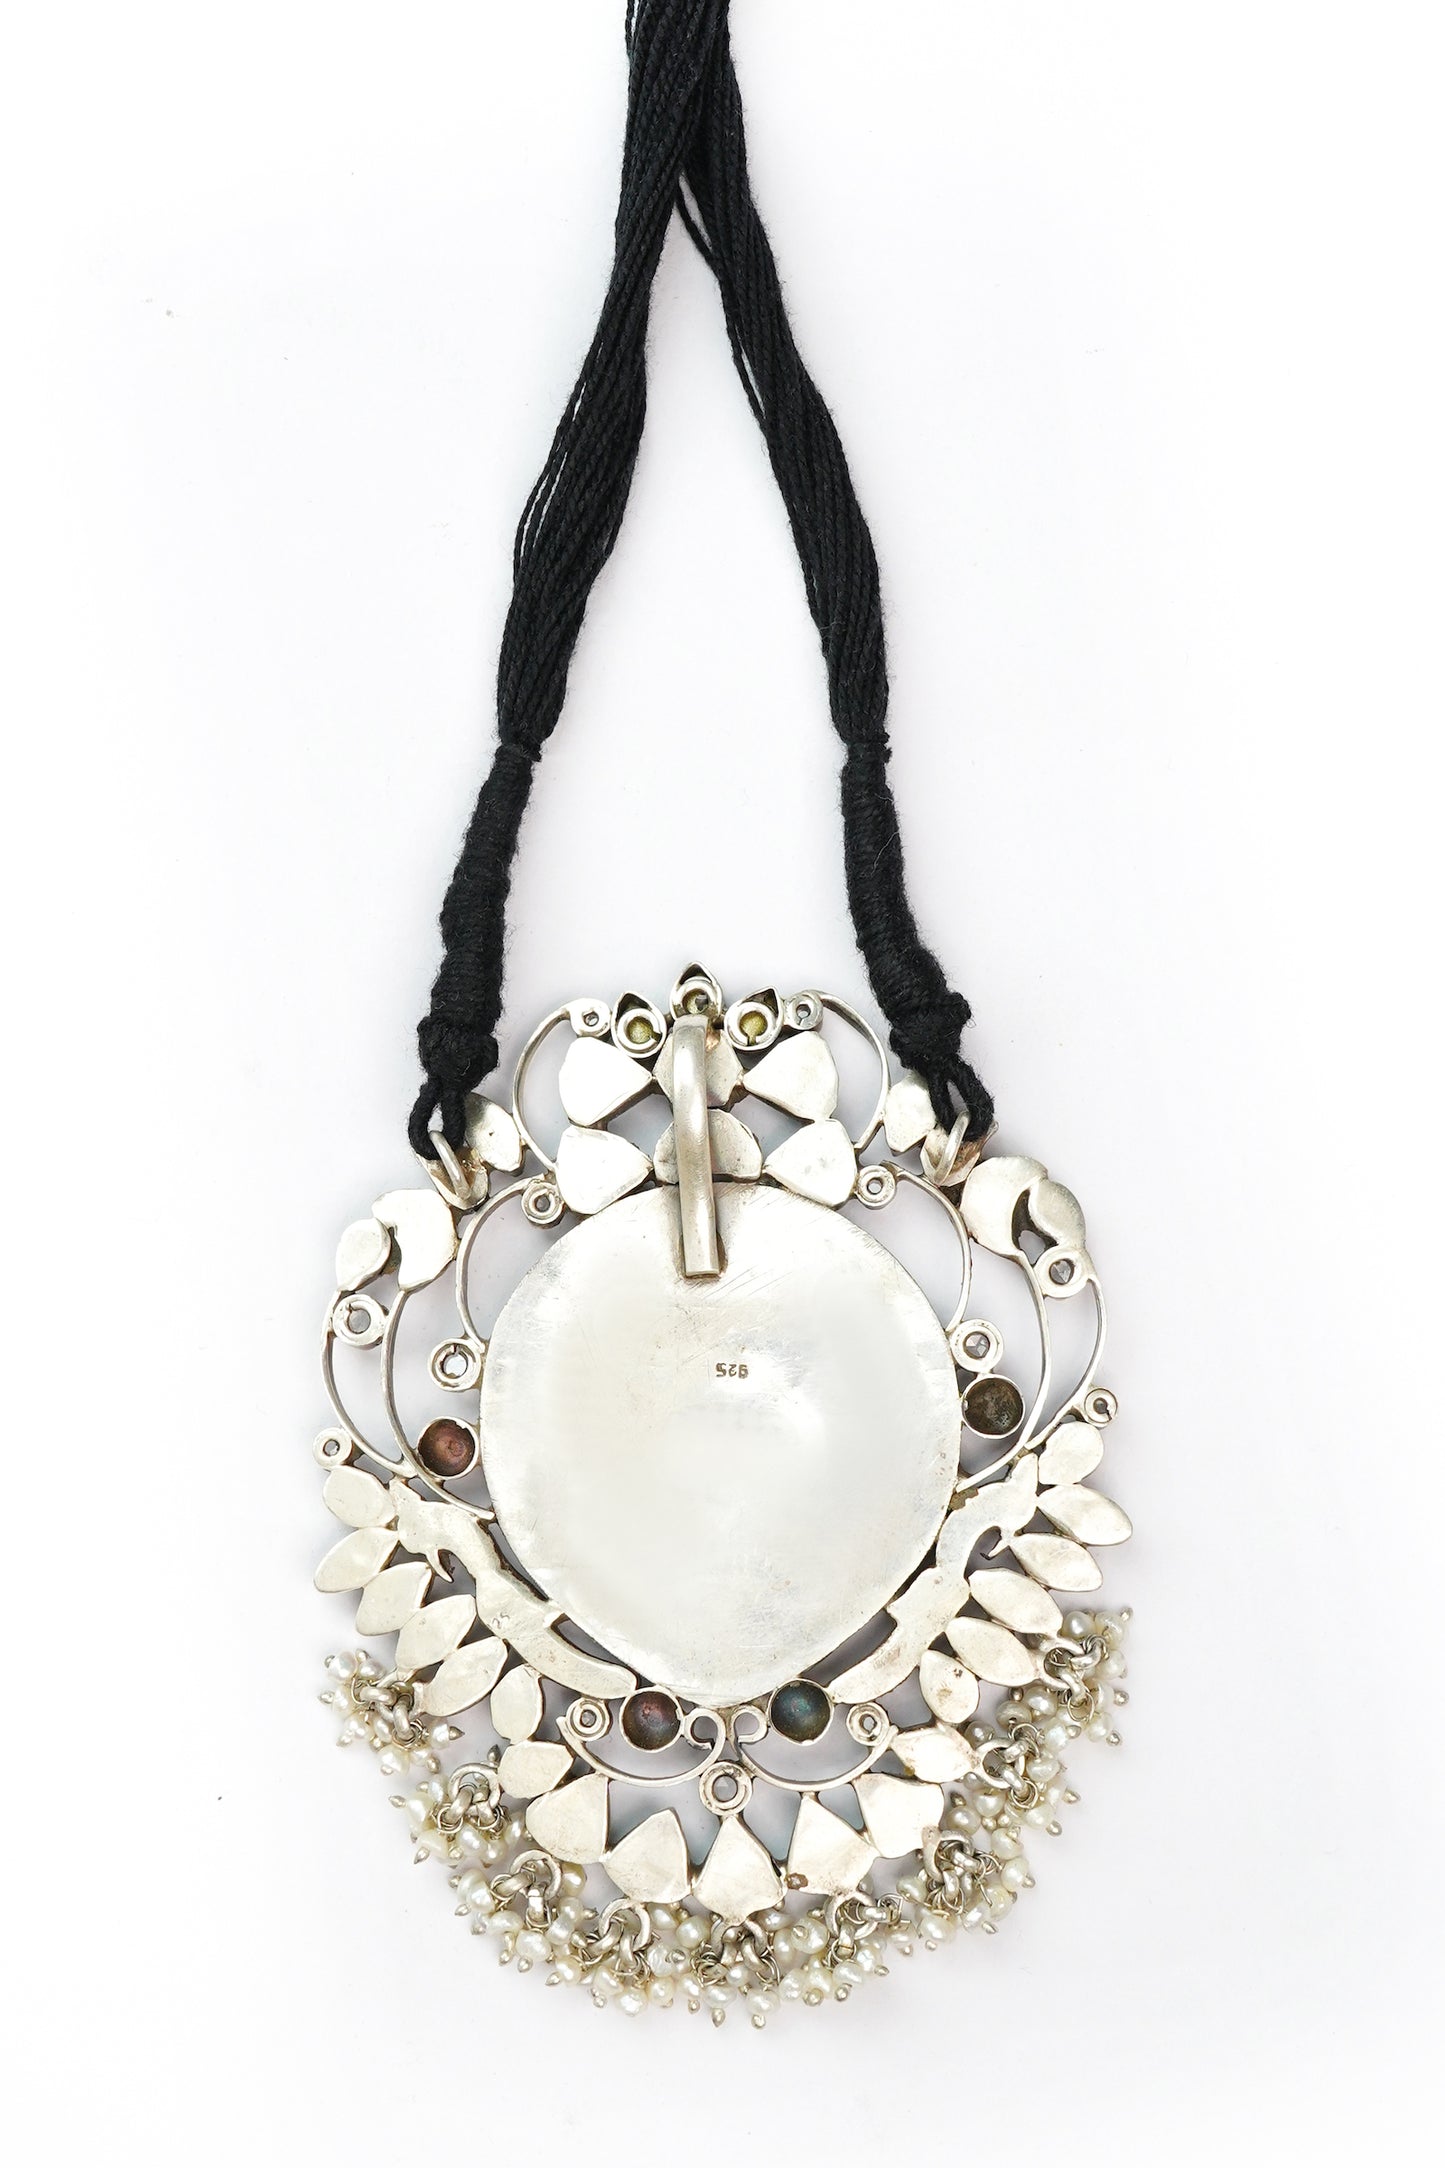 Silver Necklace with Motif and Black Patwa Thread - Neeta Boochra Jewellery